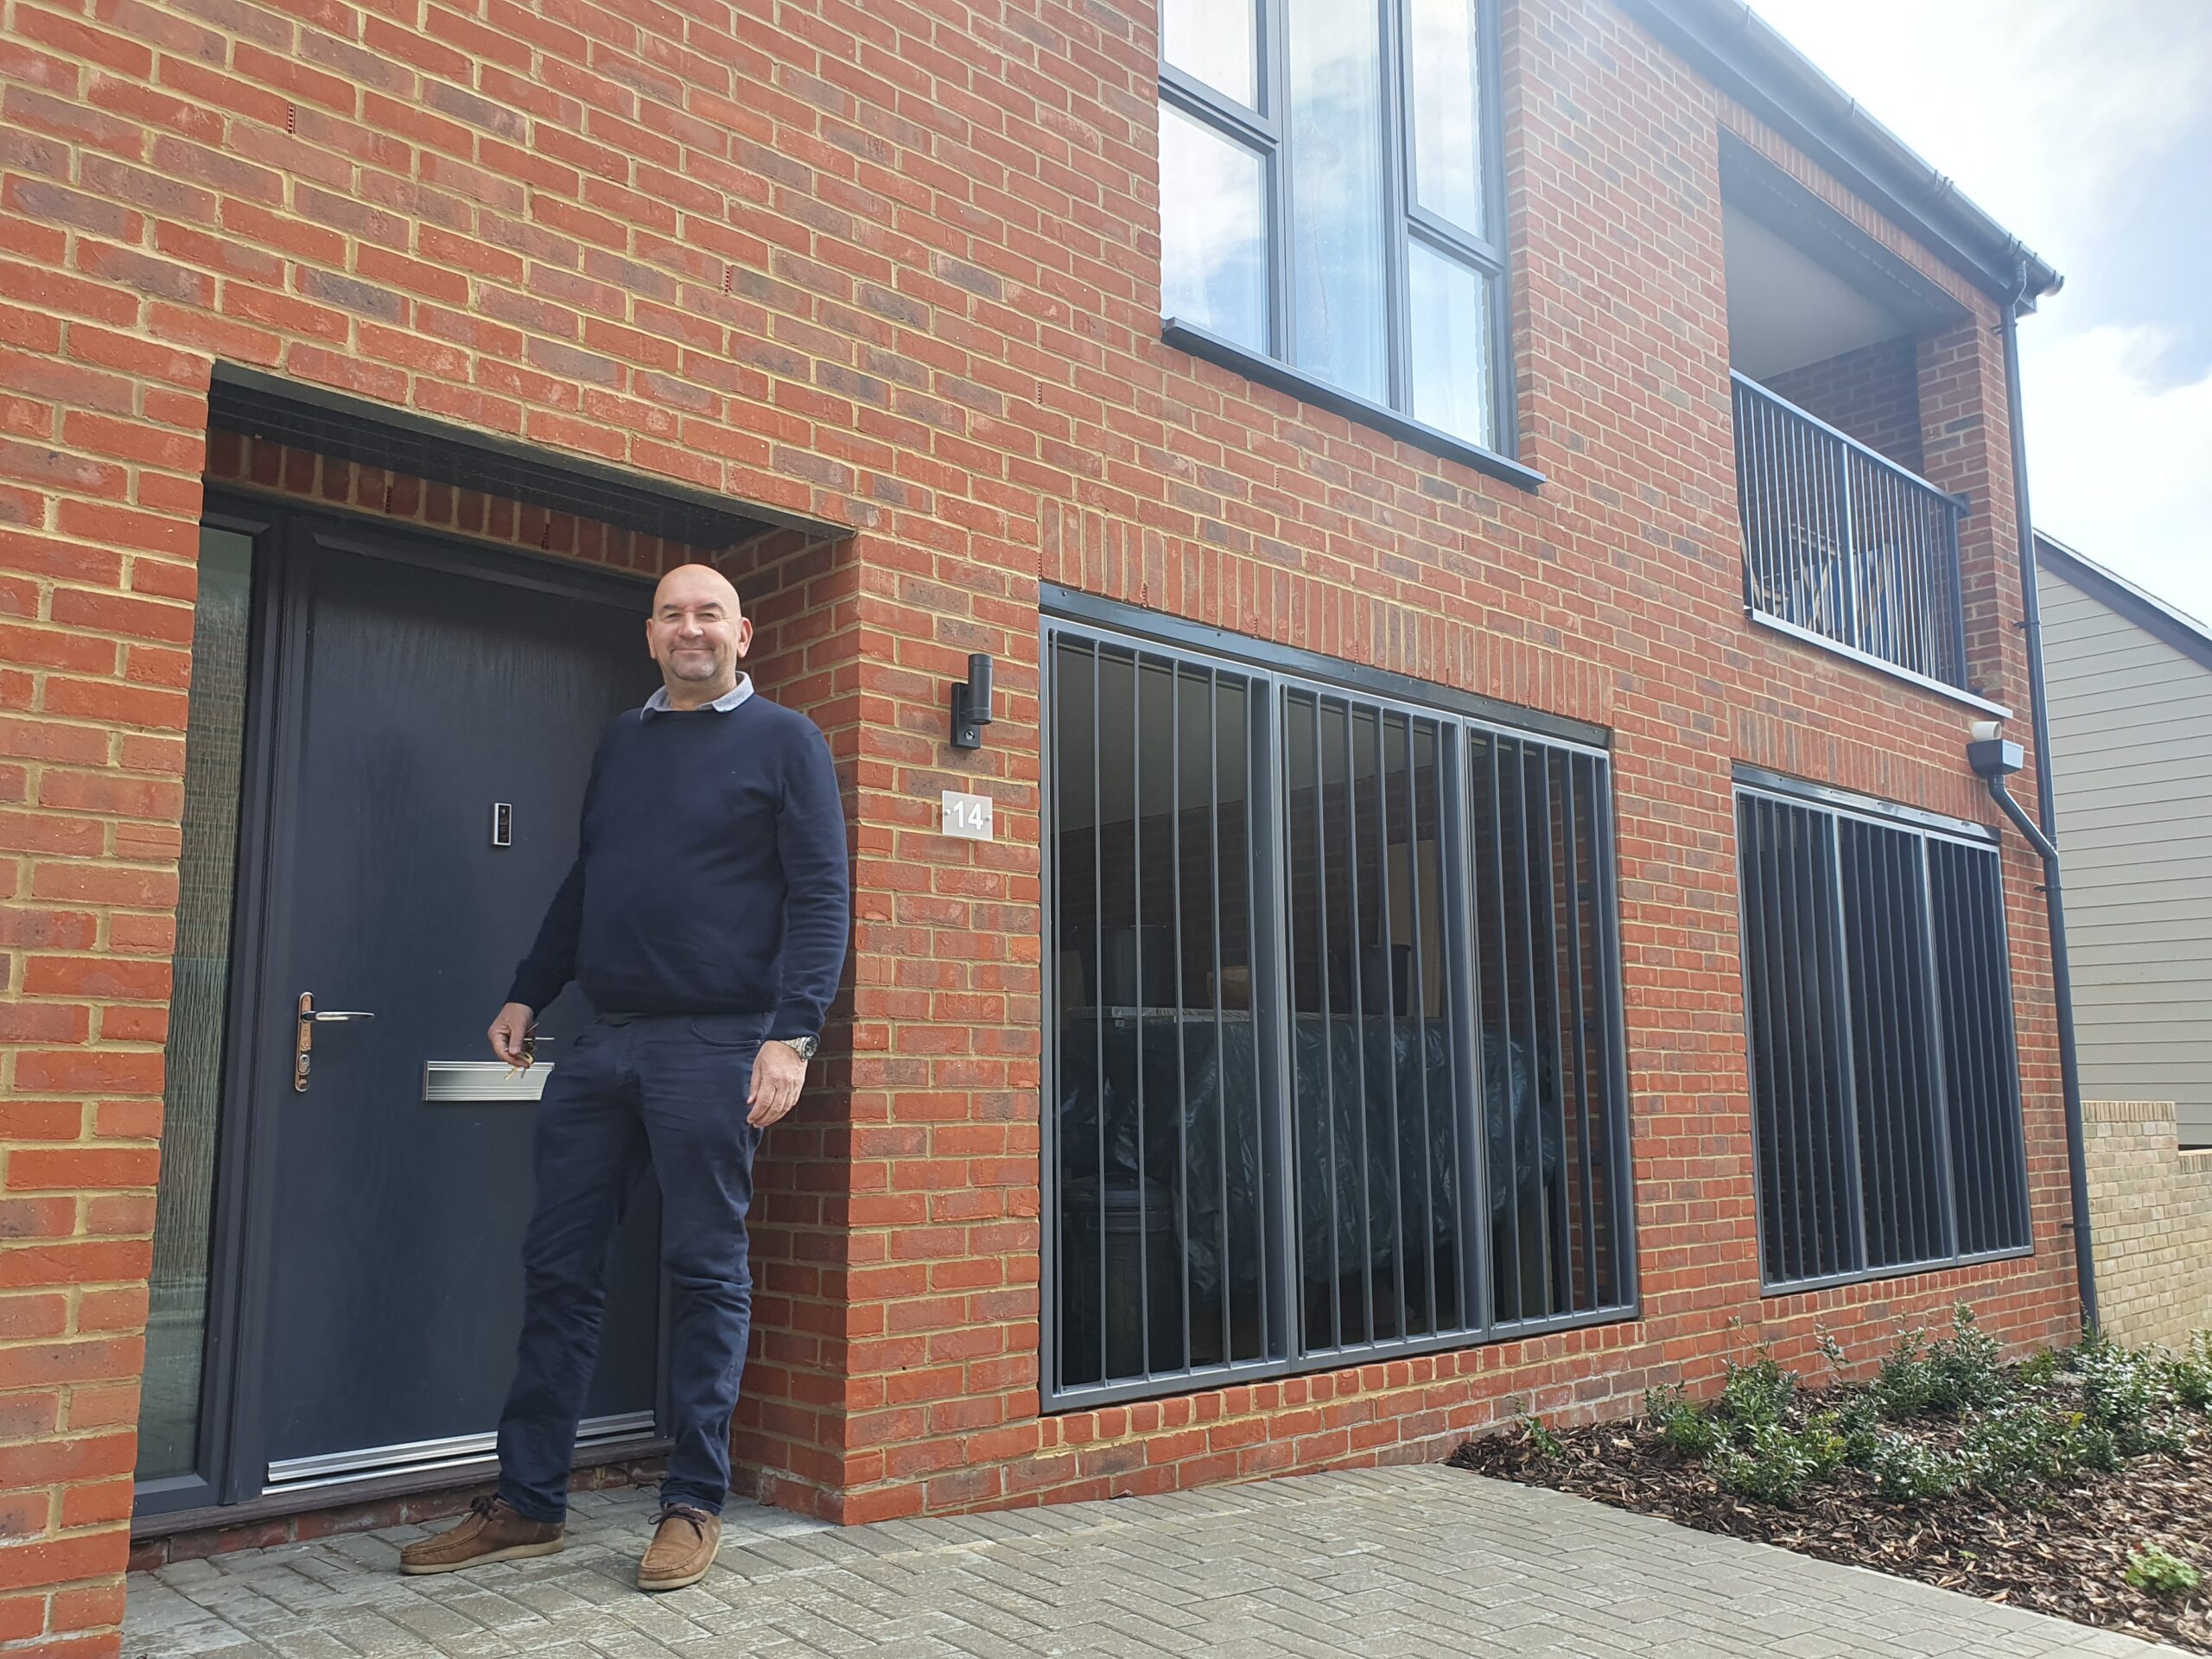 Read about Jason Dodd’s home purchase journey: A Dream Home Found at Alkerden Gateway